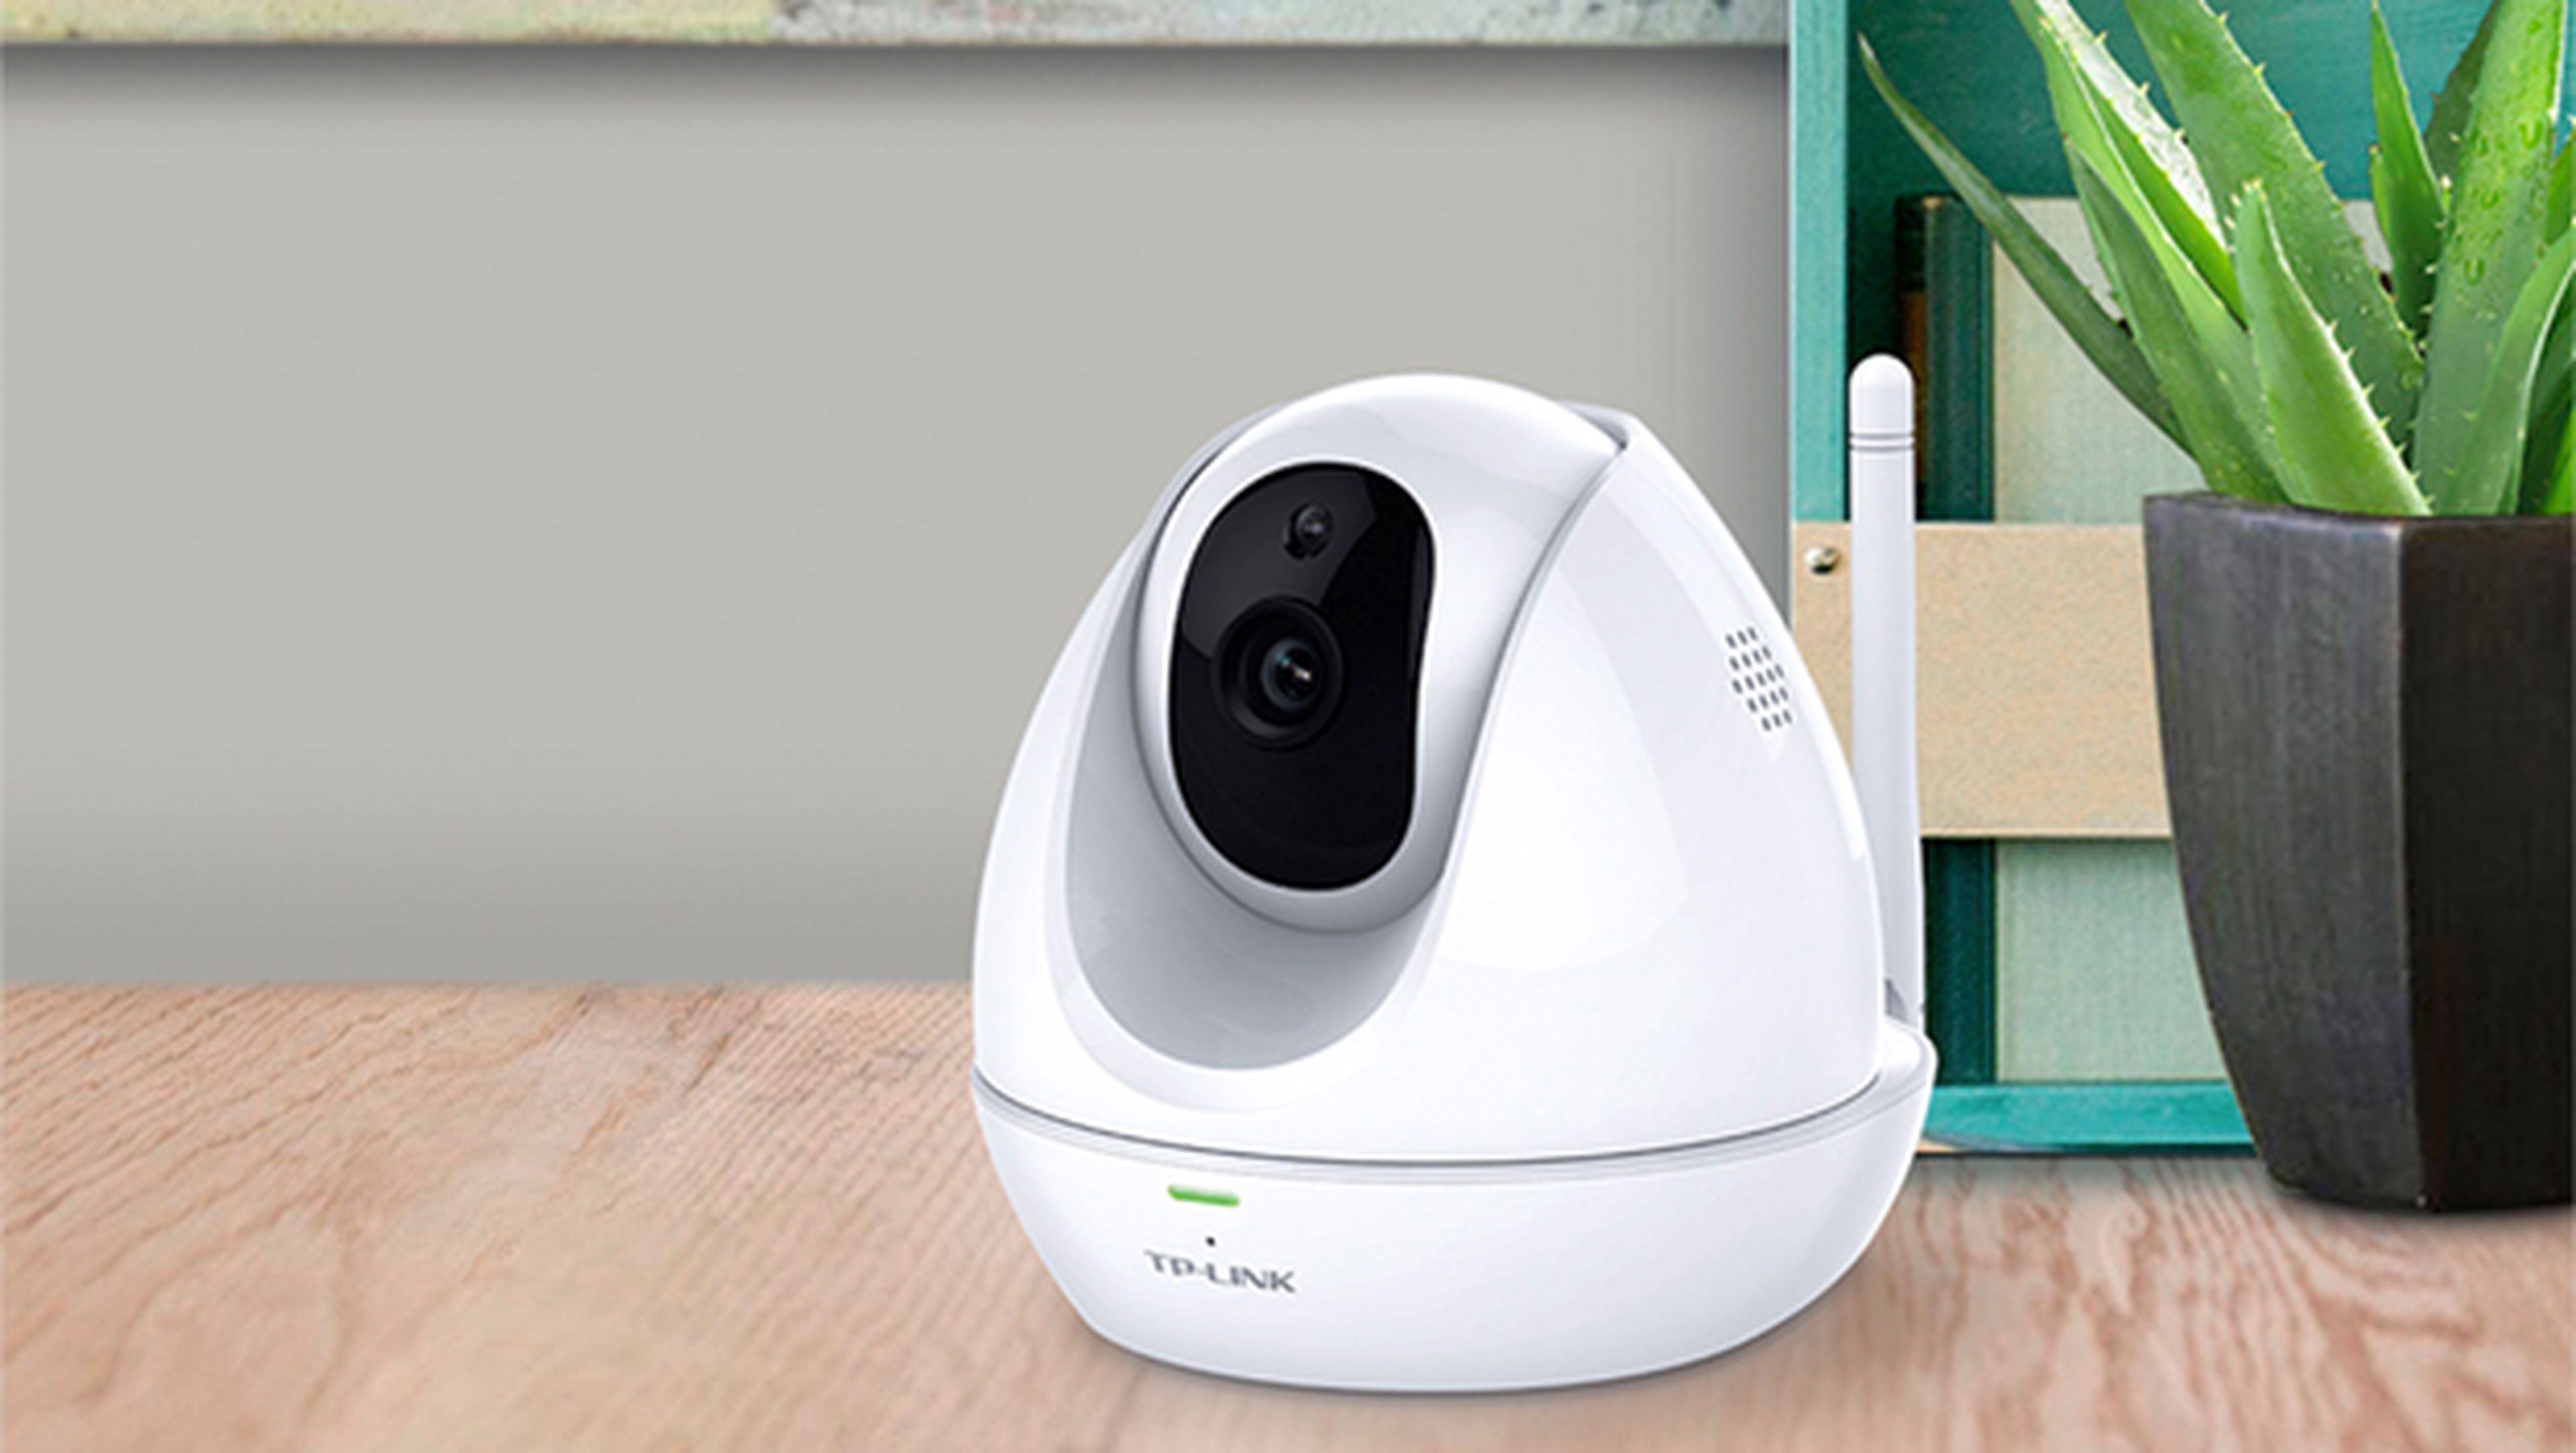 TP-Link NC450, cámara Wi-Fi para vigilar tu casa a distancia